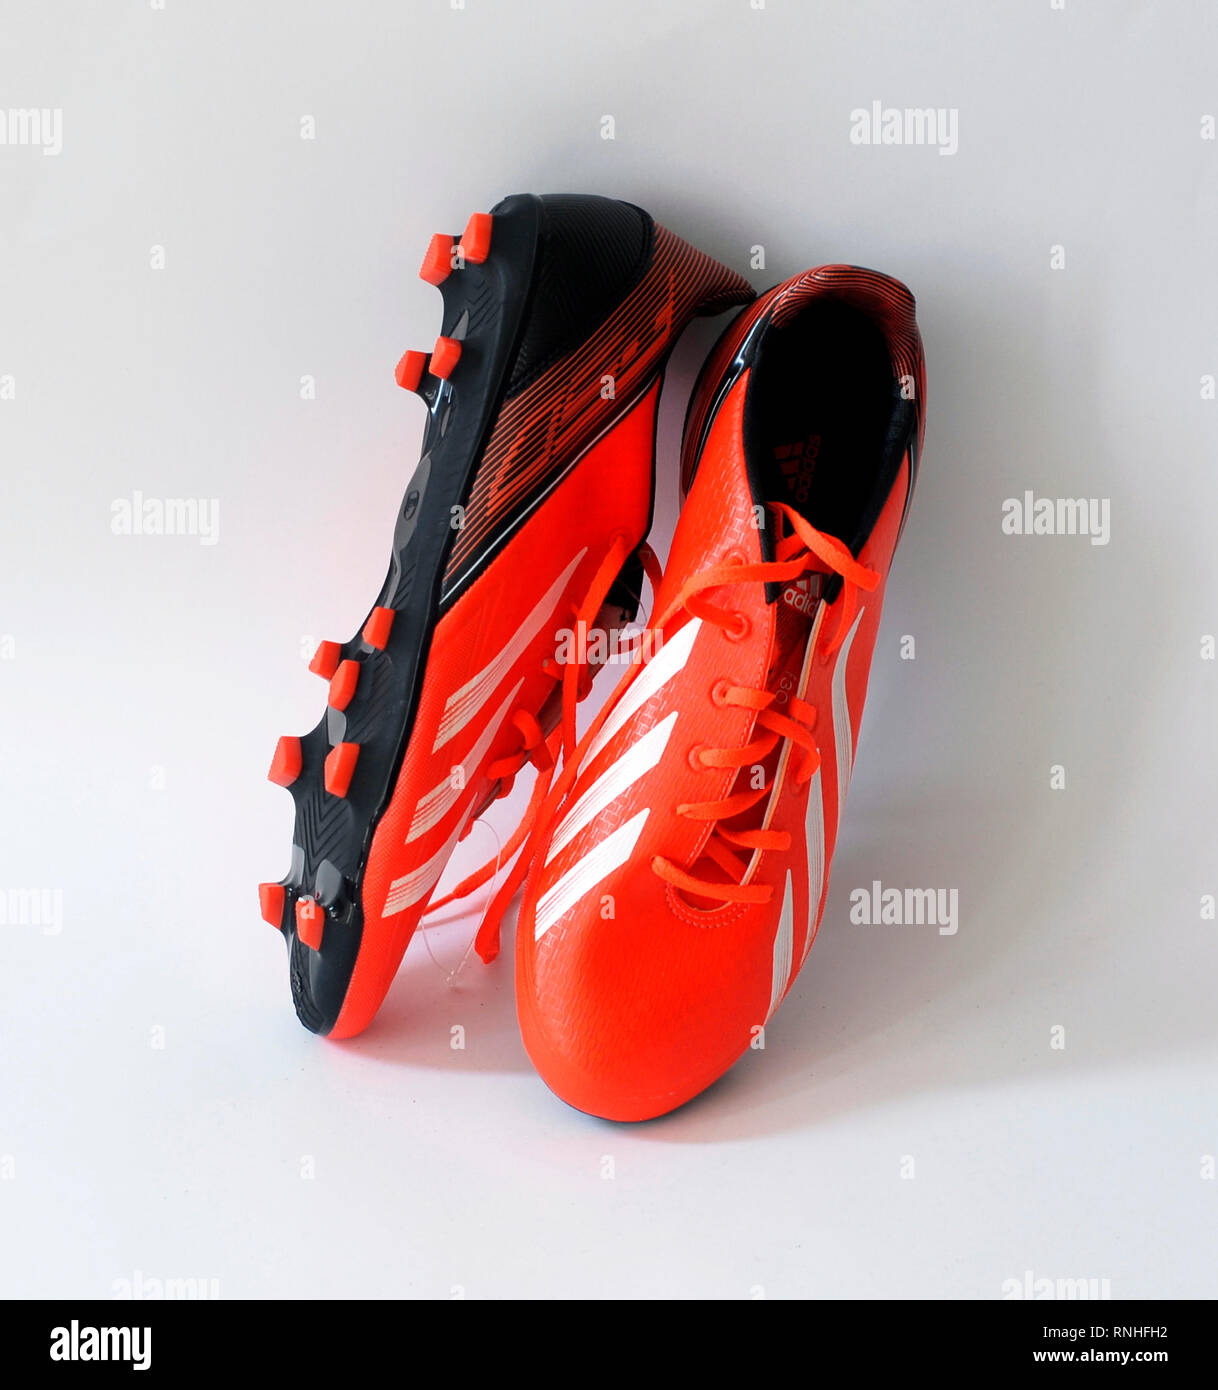 adidas shoes football 2013